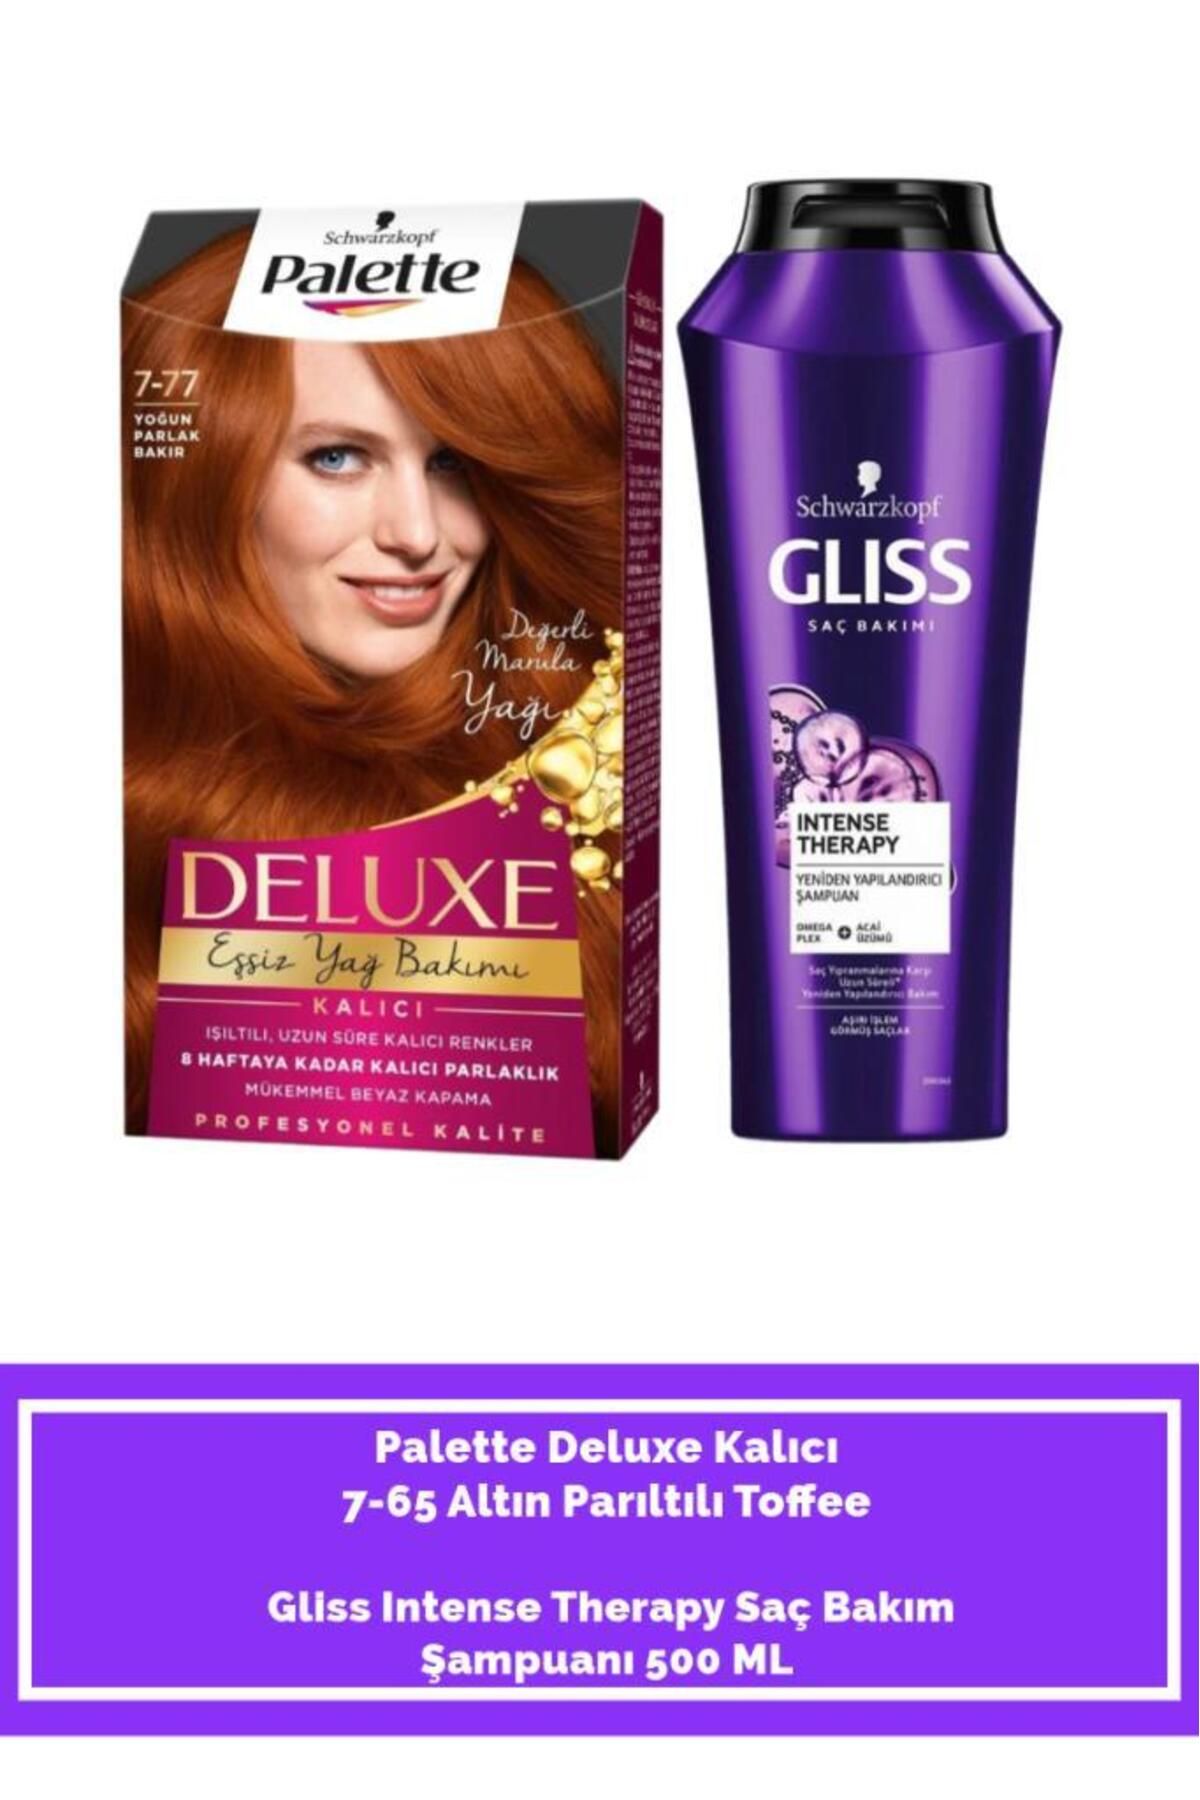 Palette Deluxe 7-77 Yoğun Parlak Bakır+ Gliss Intense Therapy Saç Bakım Şampuanı 500 ML